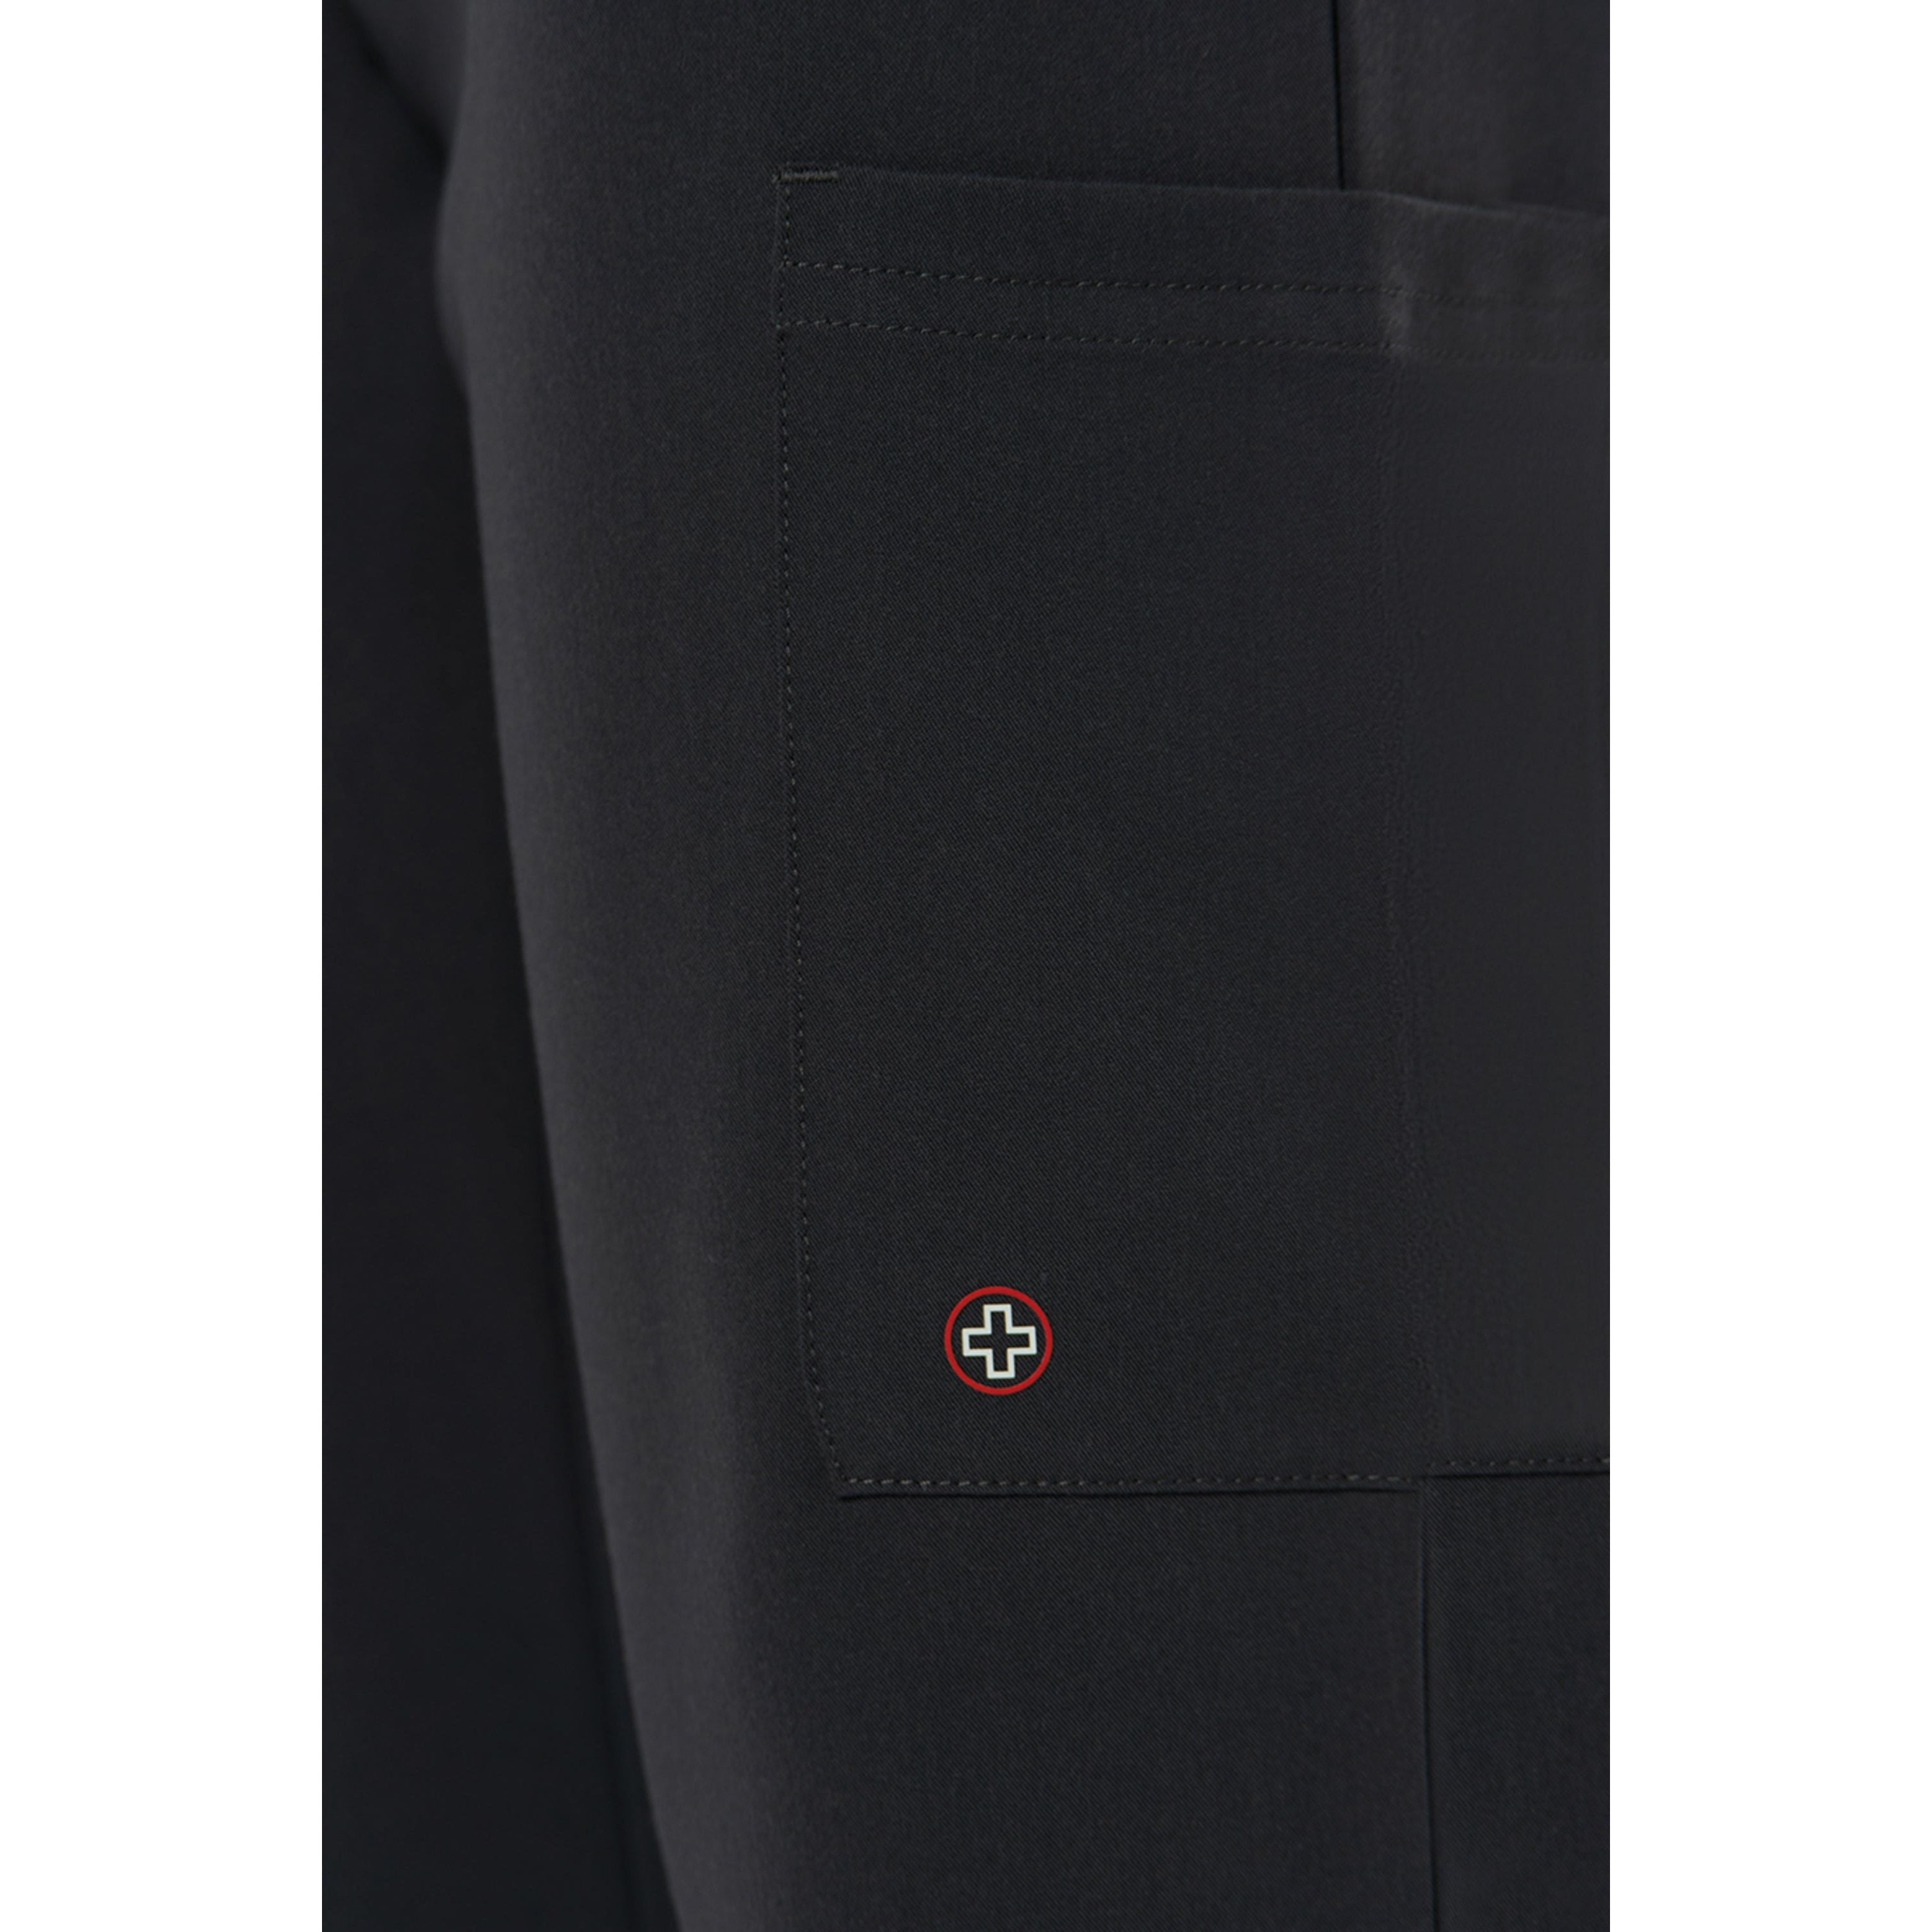 V-TESS Slim Pants 370P Petite Inseam: 26 1/2" Petite "SALE!"